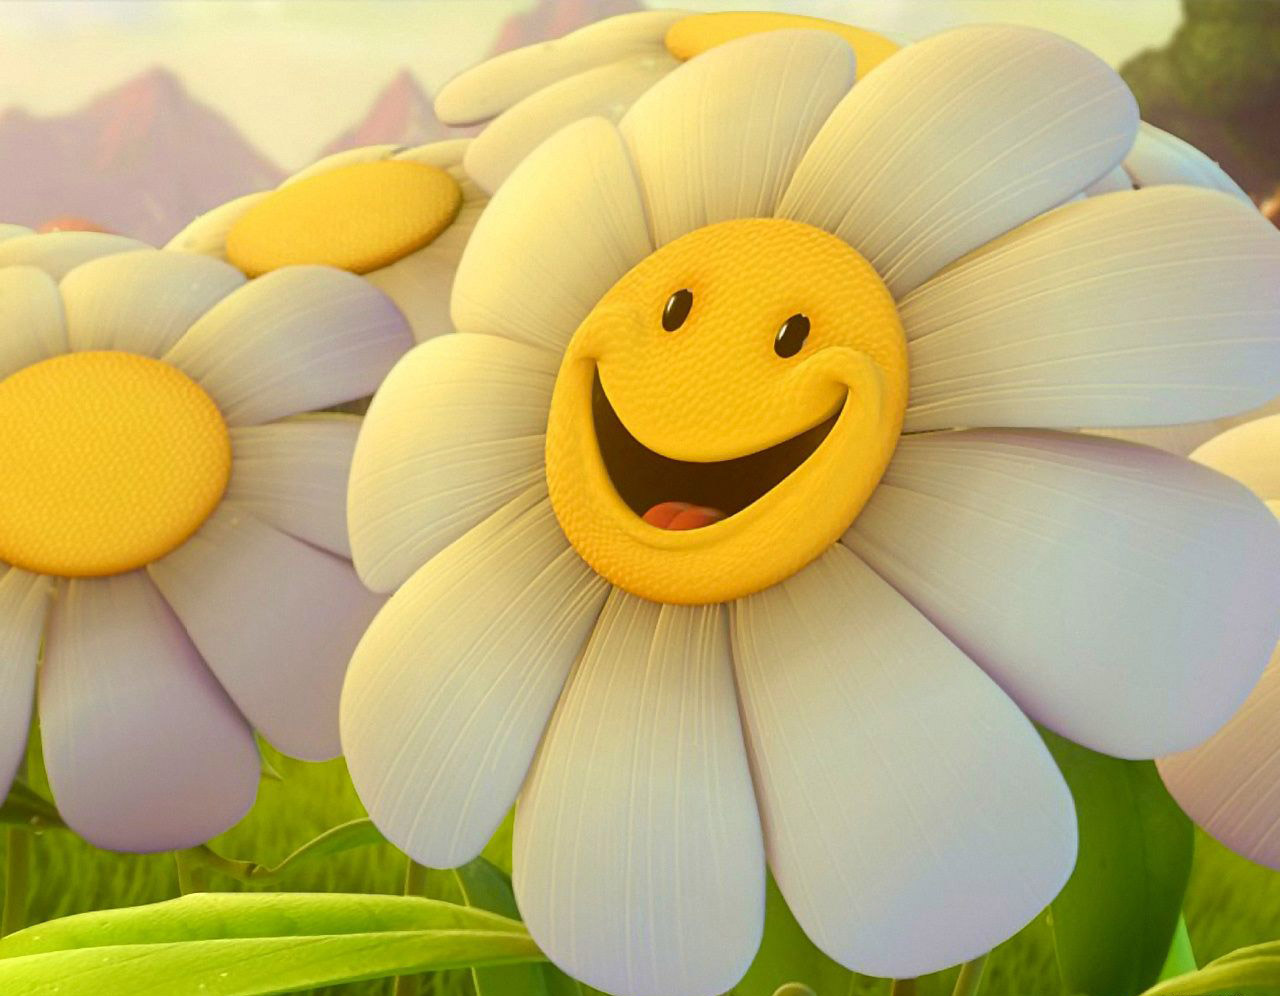 http://1.bp.blogspot.com/--iB6efeOqeg/TfnvcUSPsJI/AAAAAAAABTw/2qBnN9R5ioY/s1600/Smiley_Flower_Happy%252521_wallpaper.jpeg